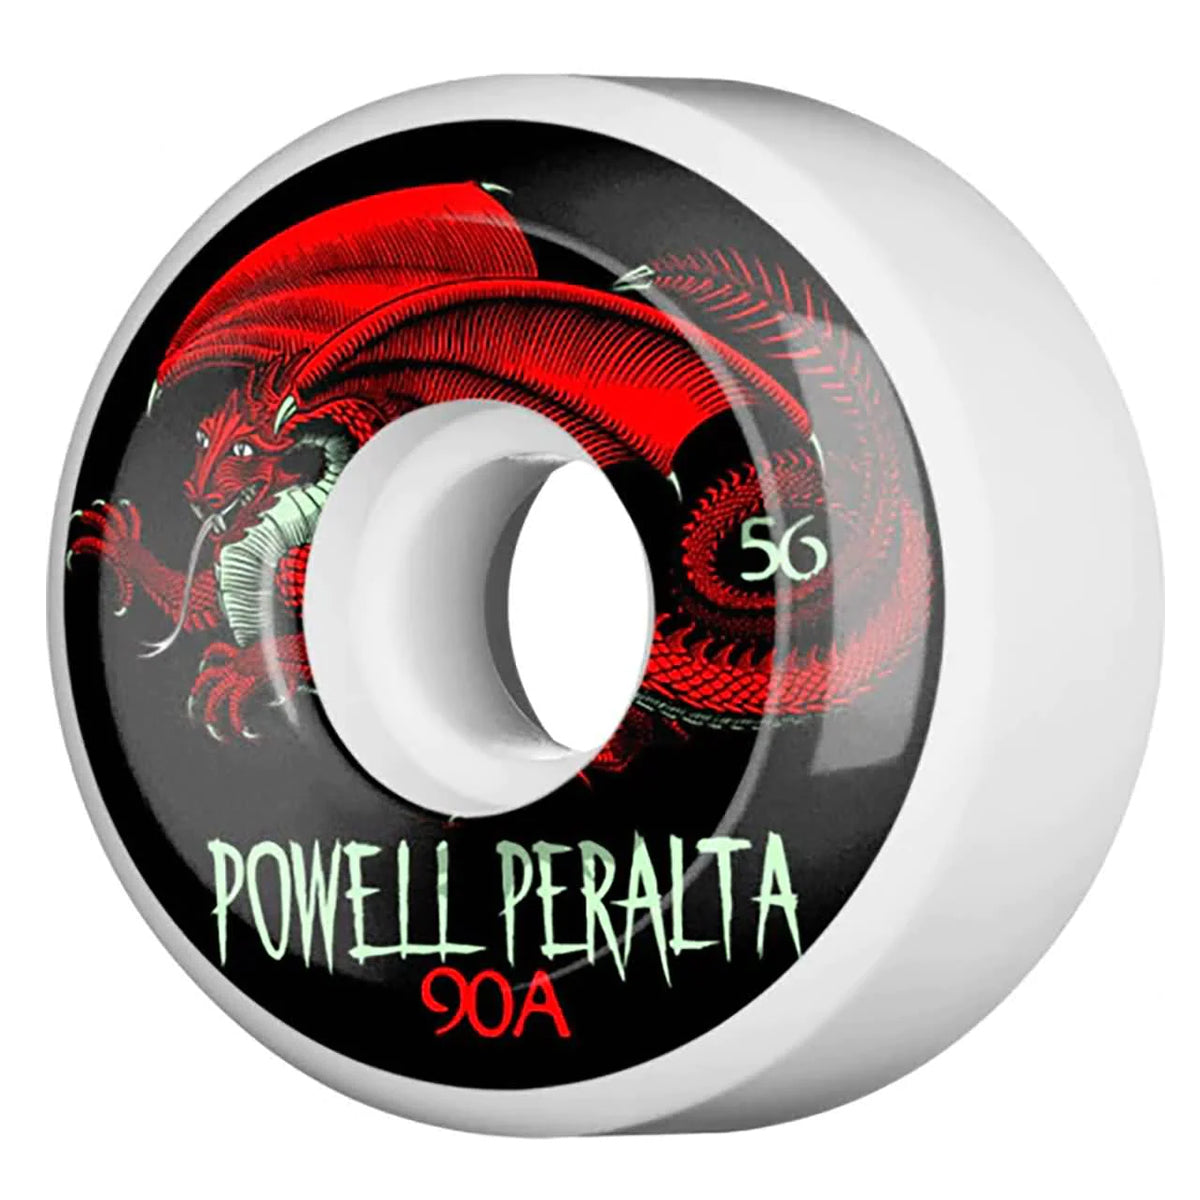 Plan B Powell Peralta Dragon Skateboard Wheels